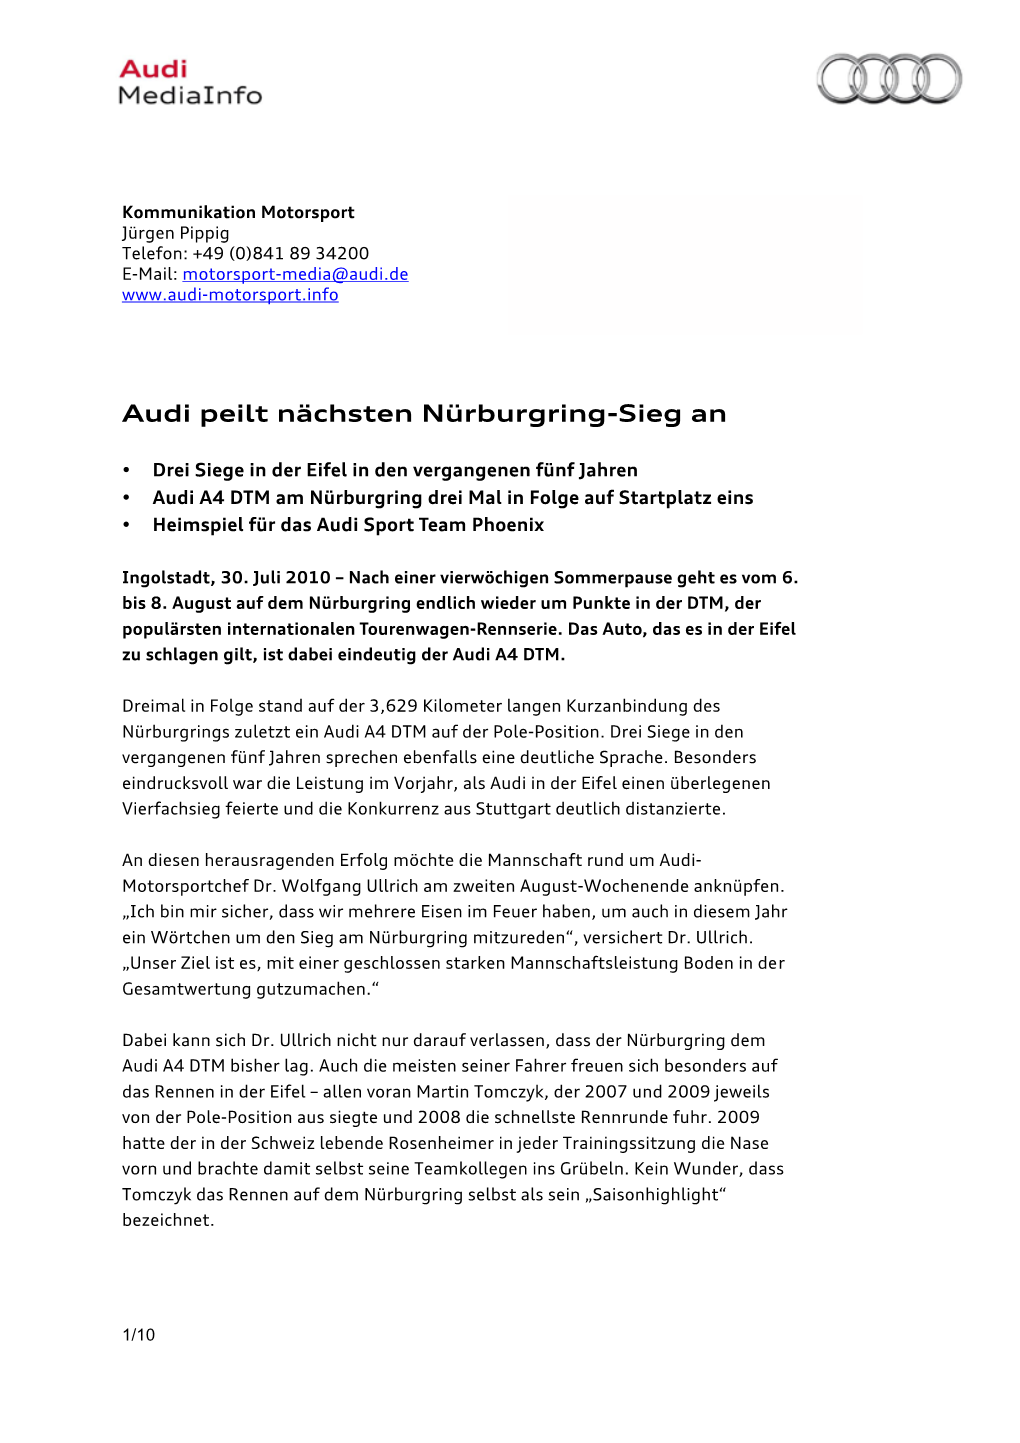 Audi Peilt Nächsten Nürburgring-Sieg An